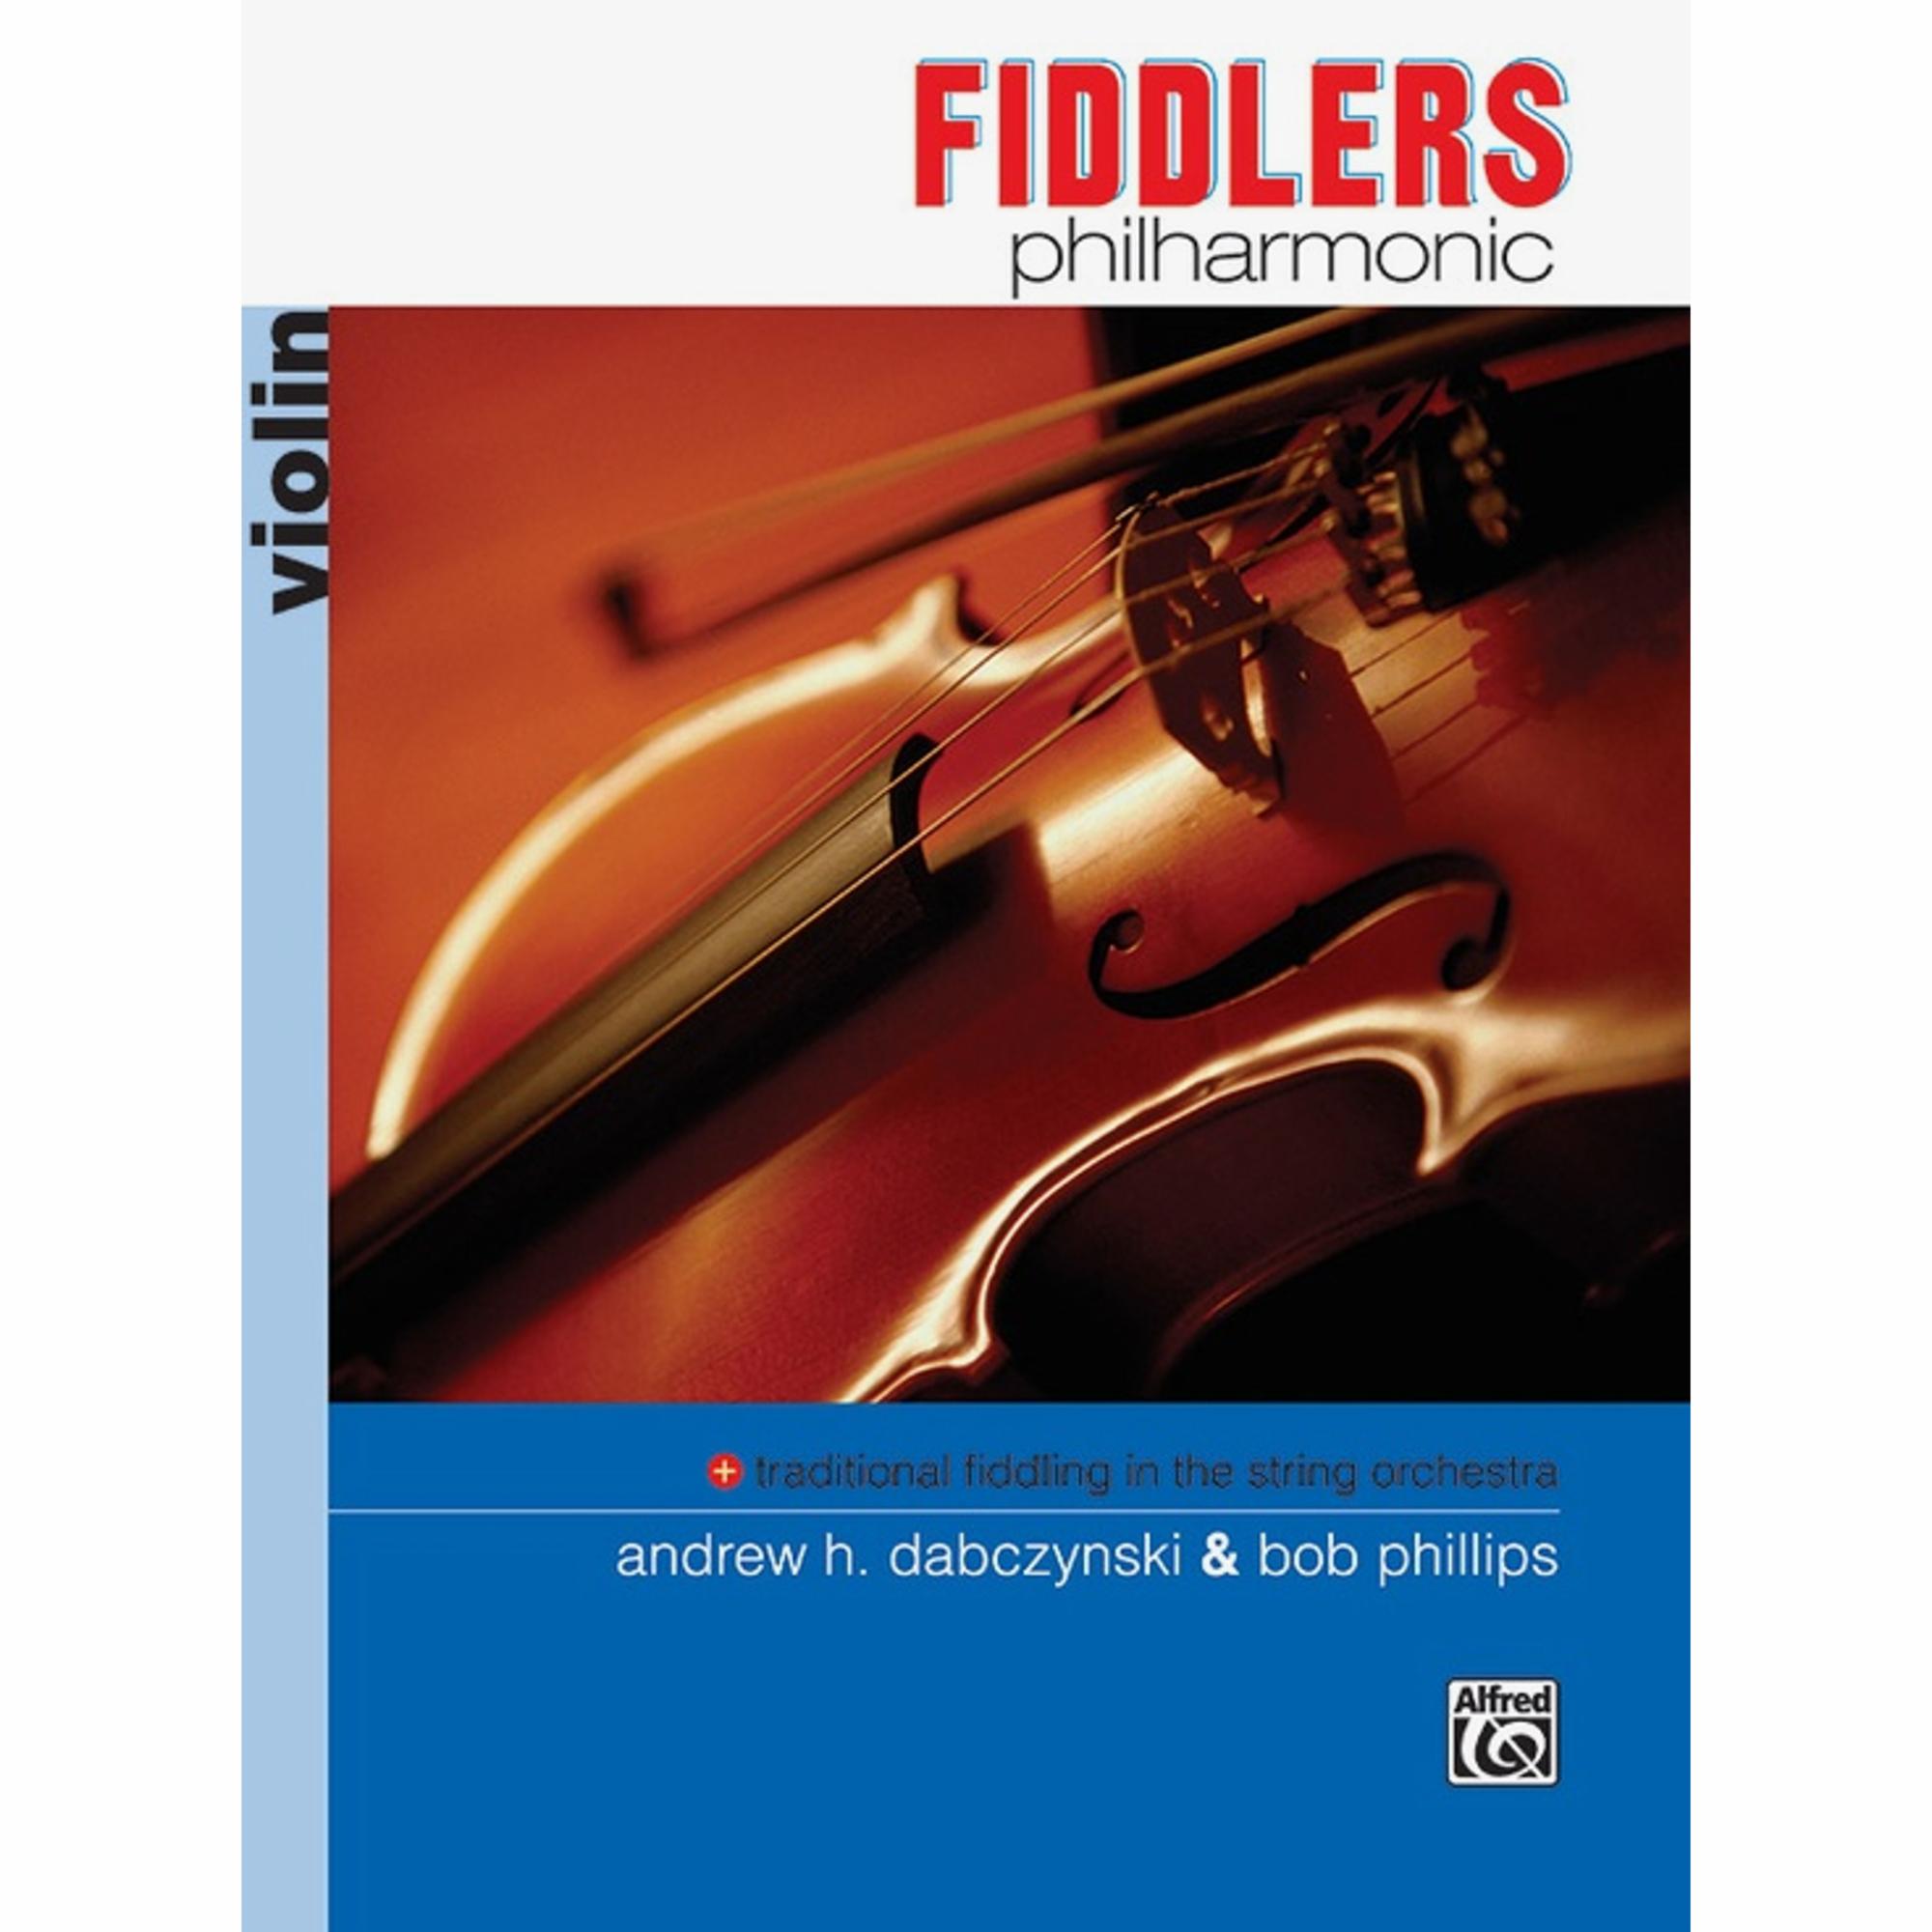 Fiddlers Philharmonic for Strings